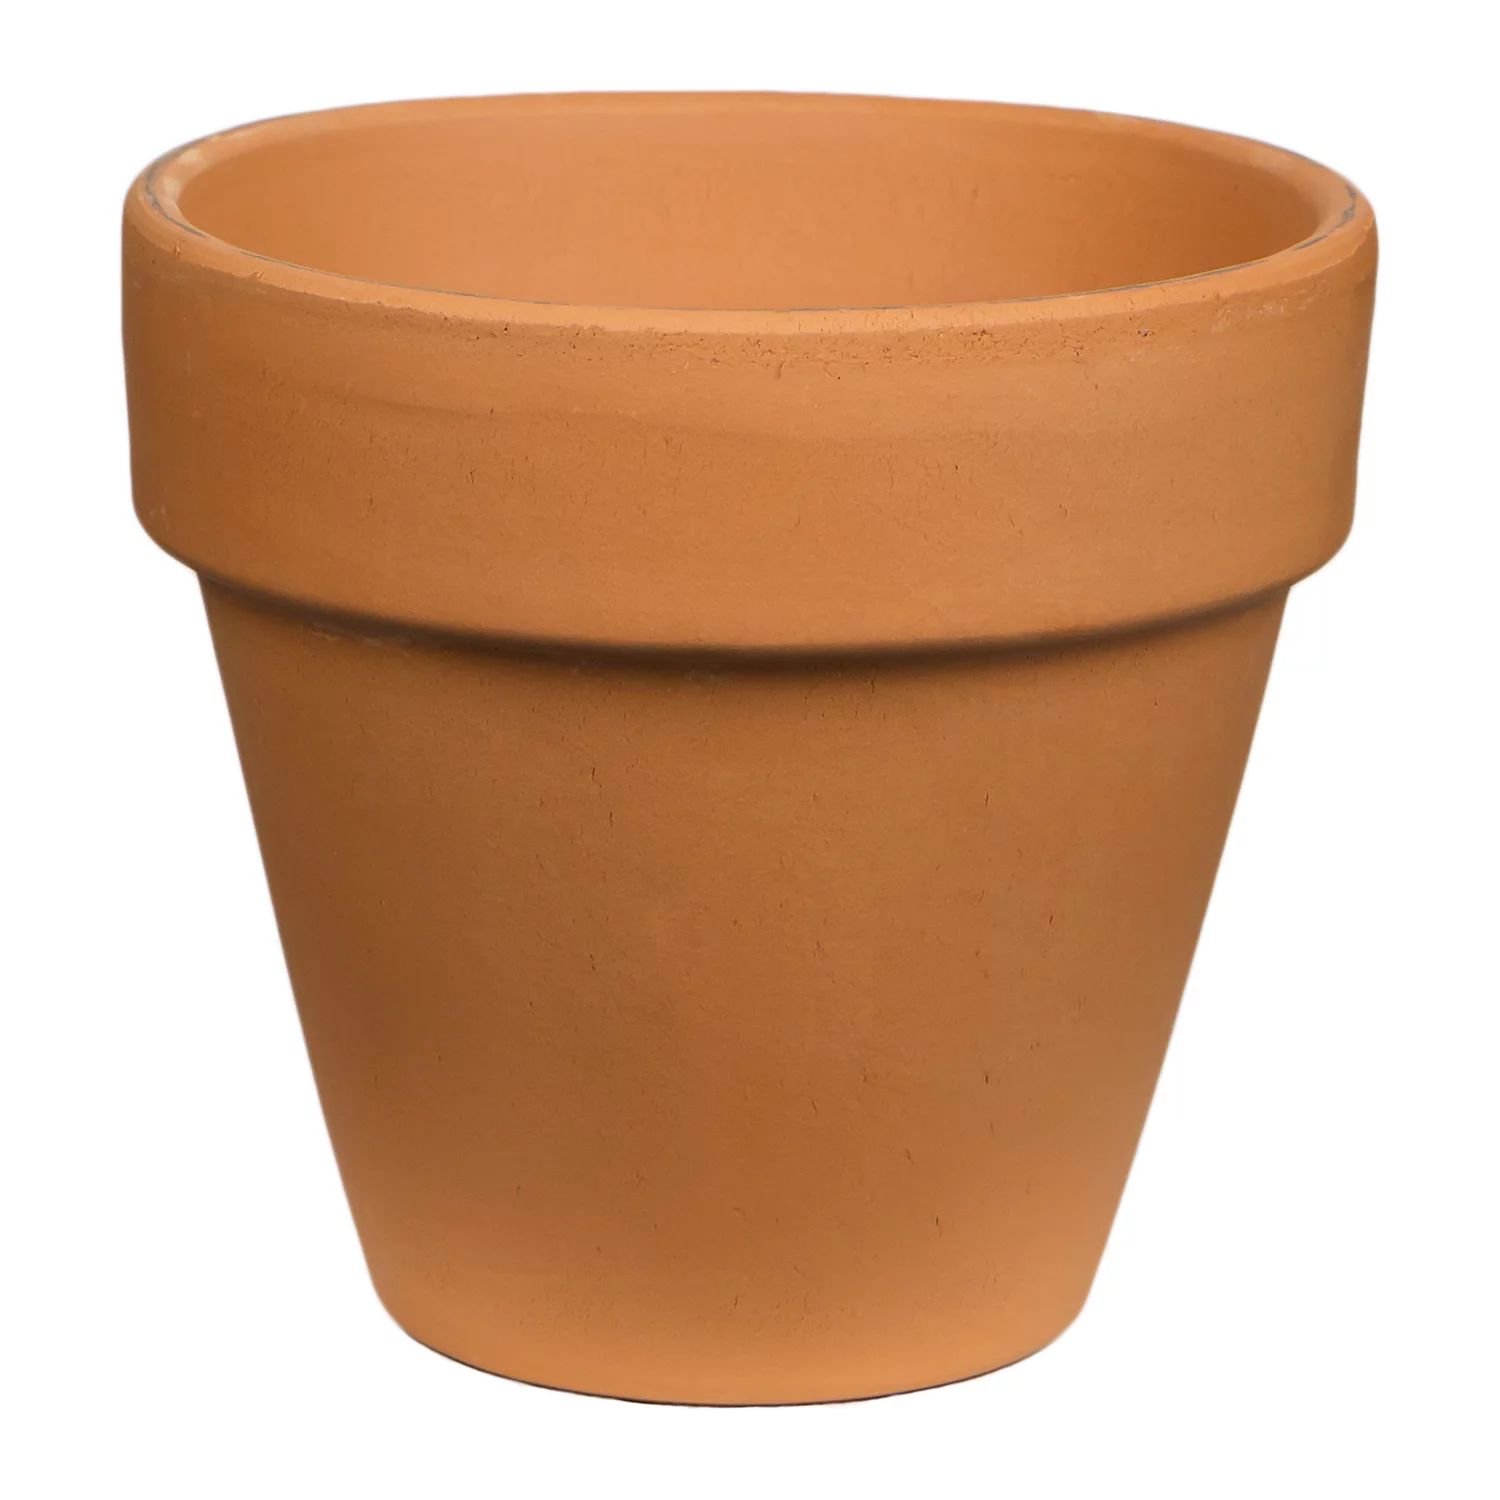 Pennington Red Terra Cotta Clay Planter, 4 inch Pot | Walmart (US)